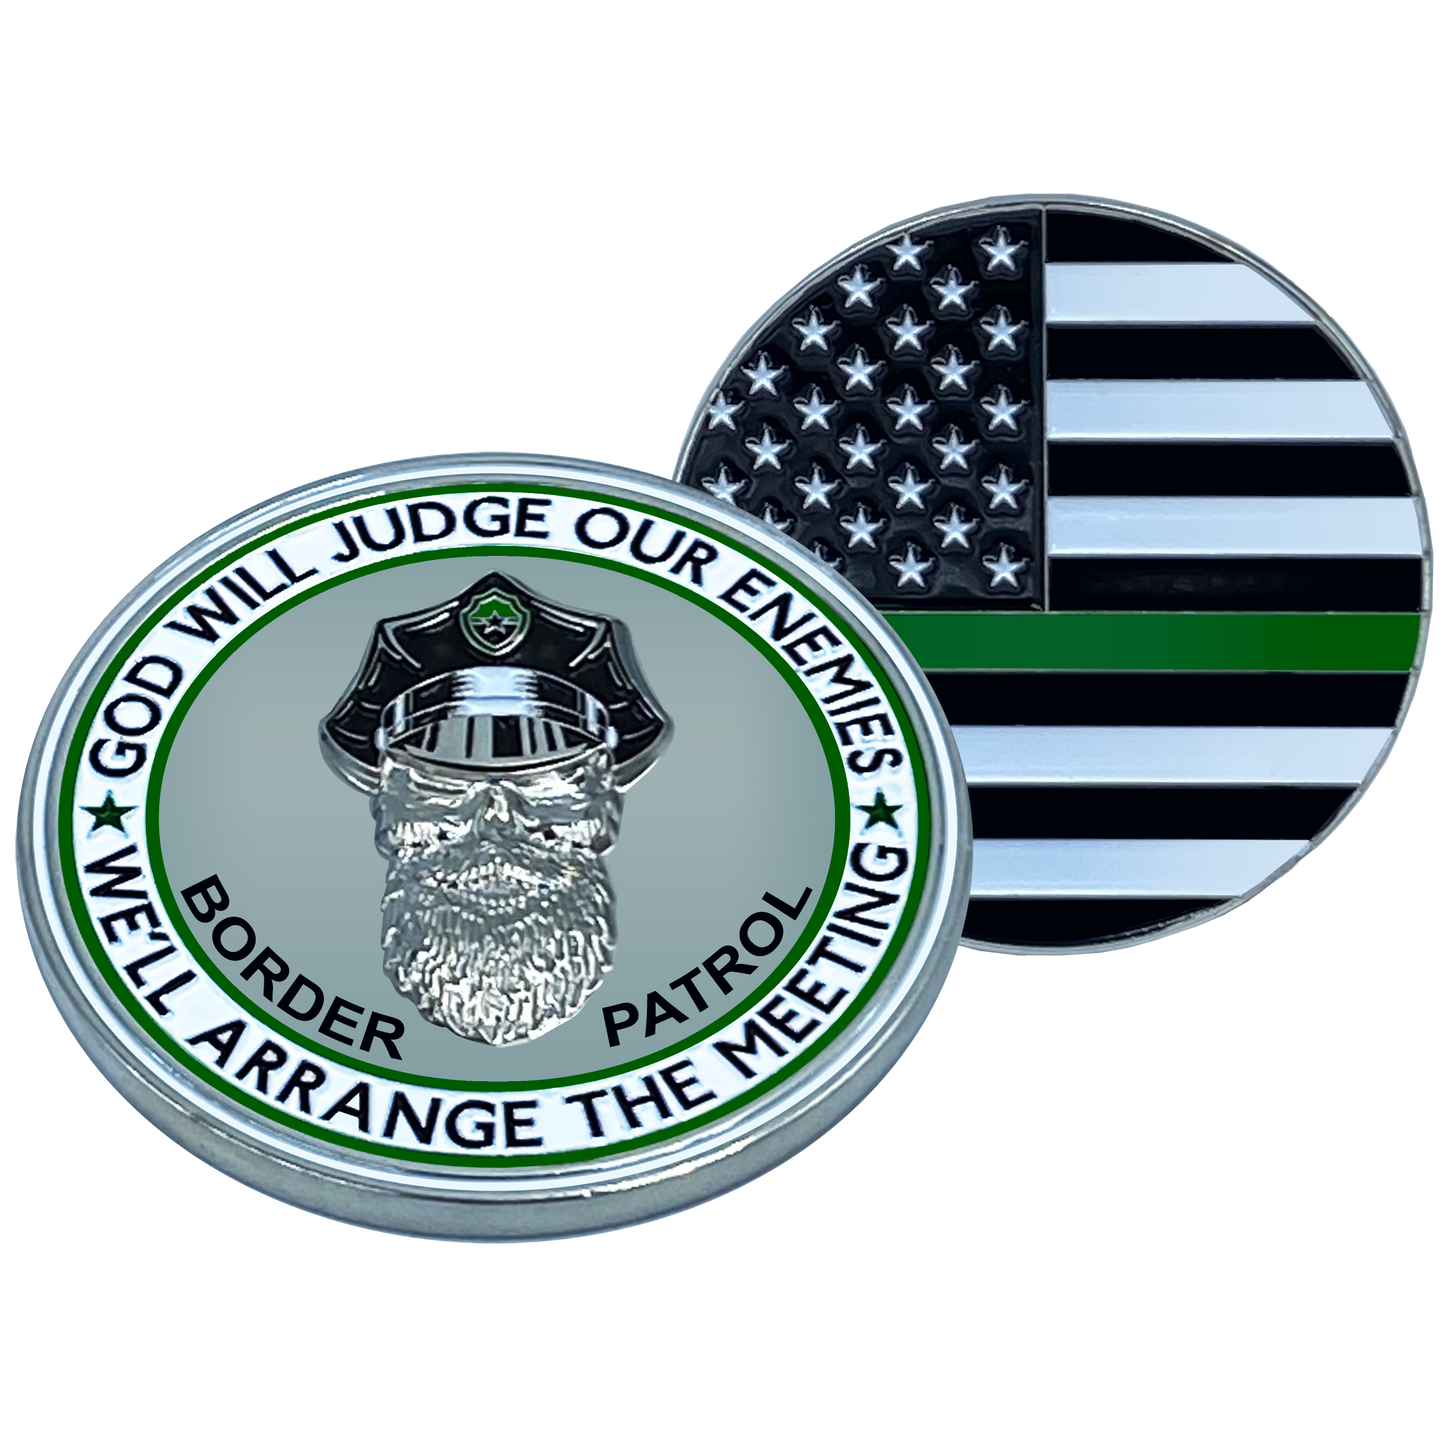 EL1-002 Thin Green Line God Will Judge BPA BEARD GANG SKULL Challenge Coin Police CBP Border Patrol AGENT Back the Blue